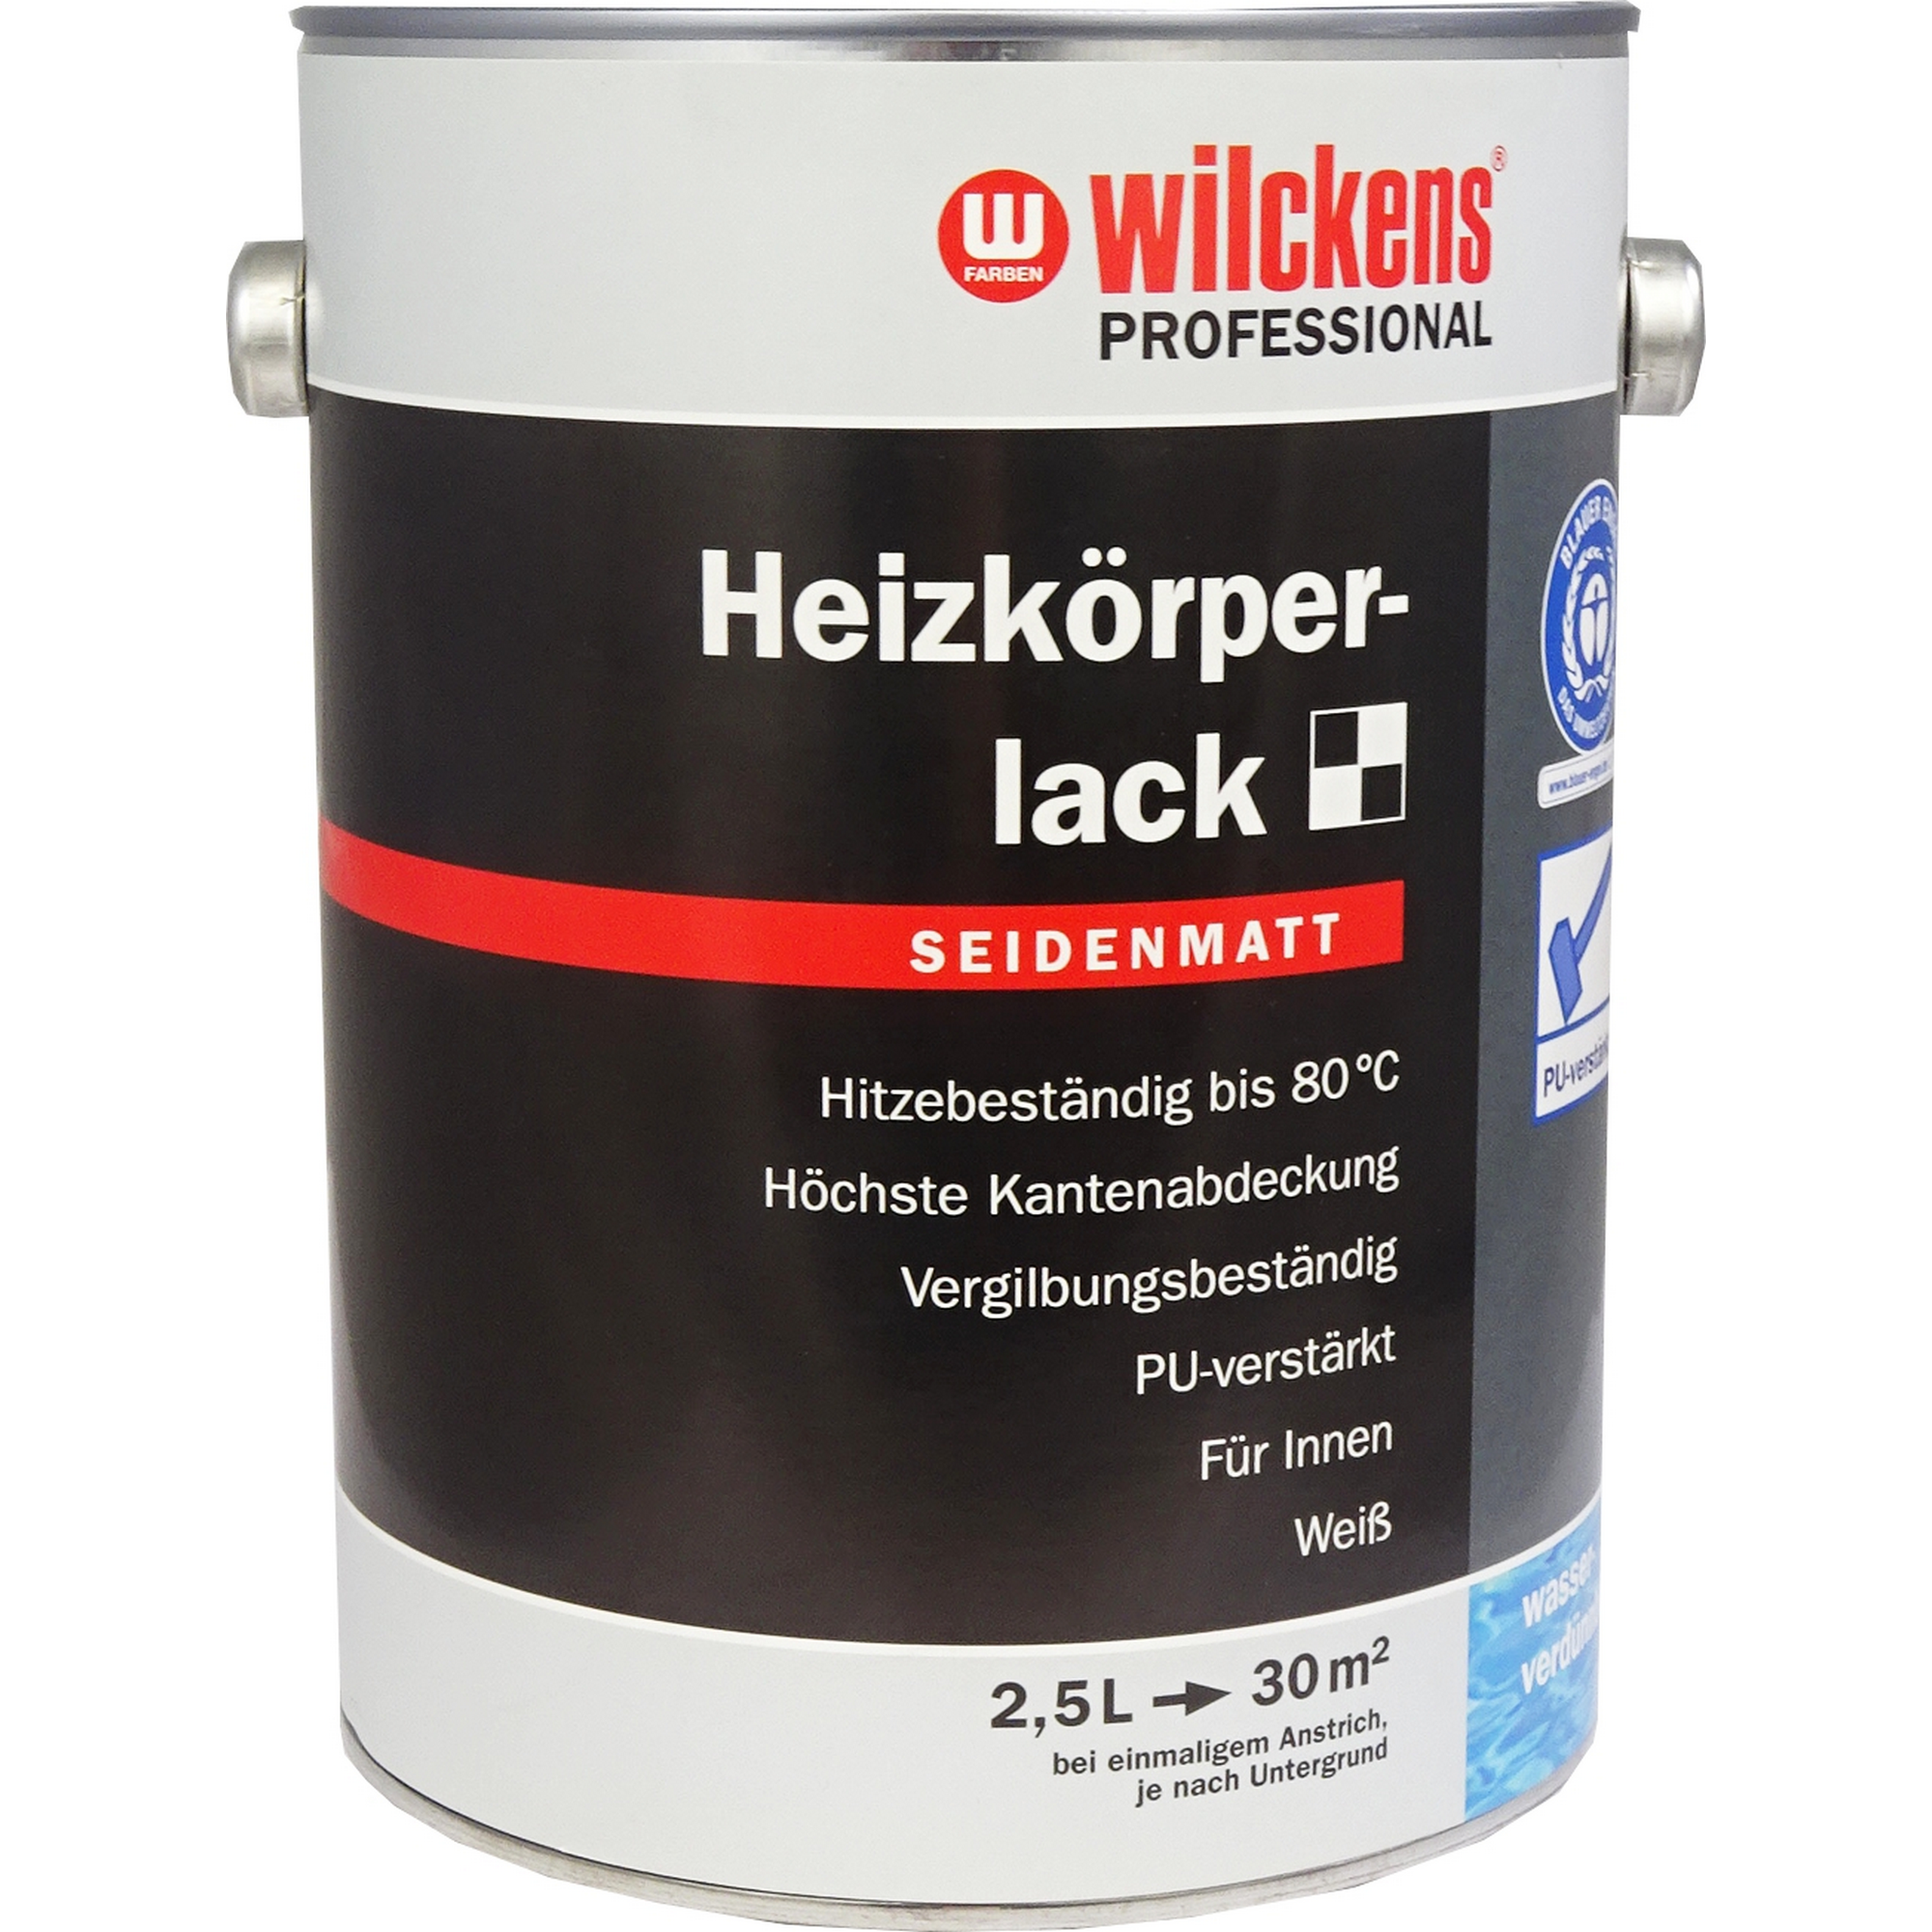 Heizkörperlack 'Professional' weiß seidenmatt 2,5 l + product picture